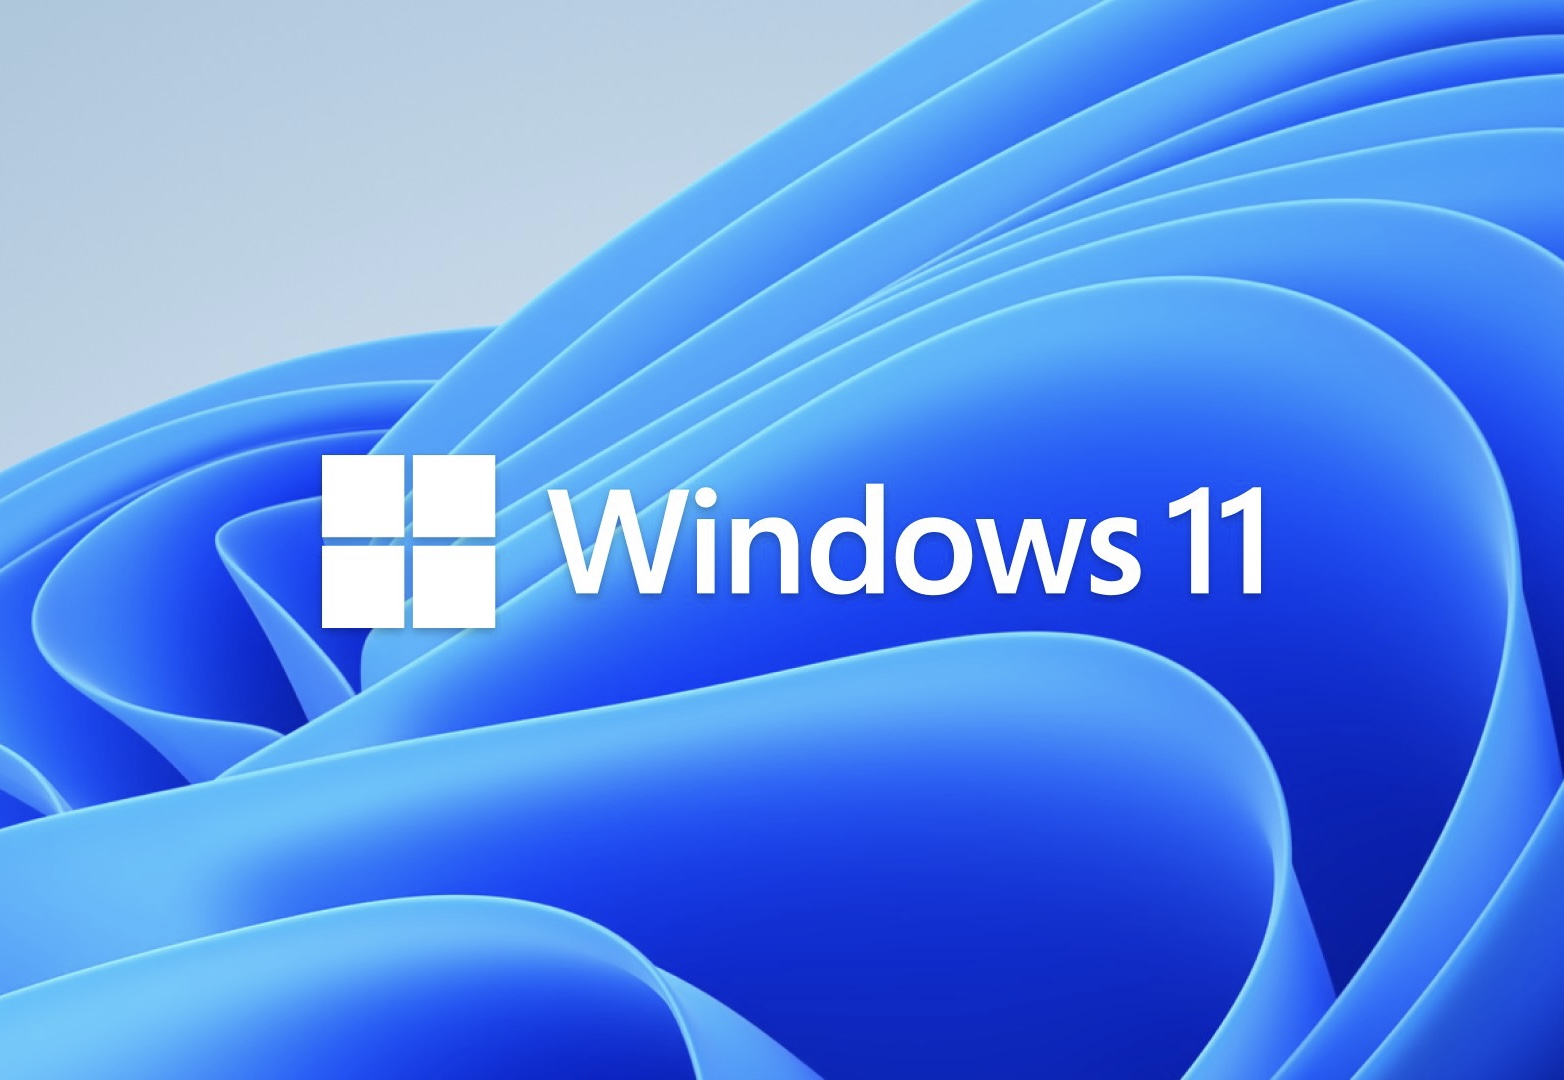 Windows 11 pictures